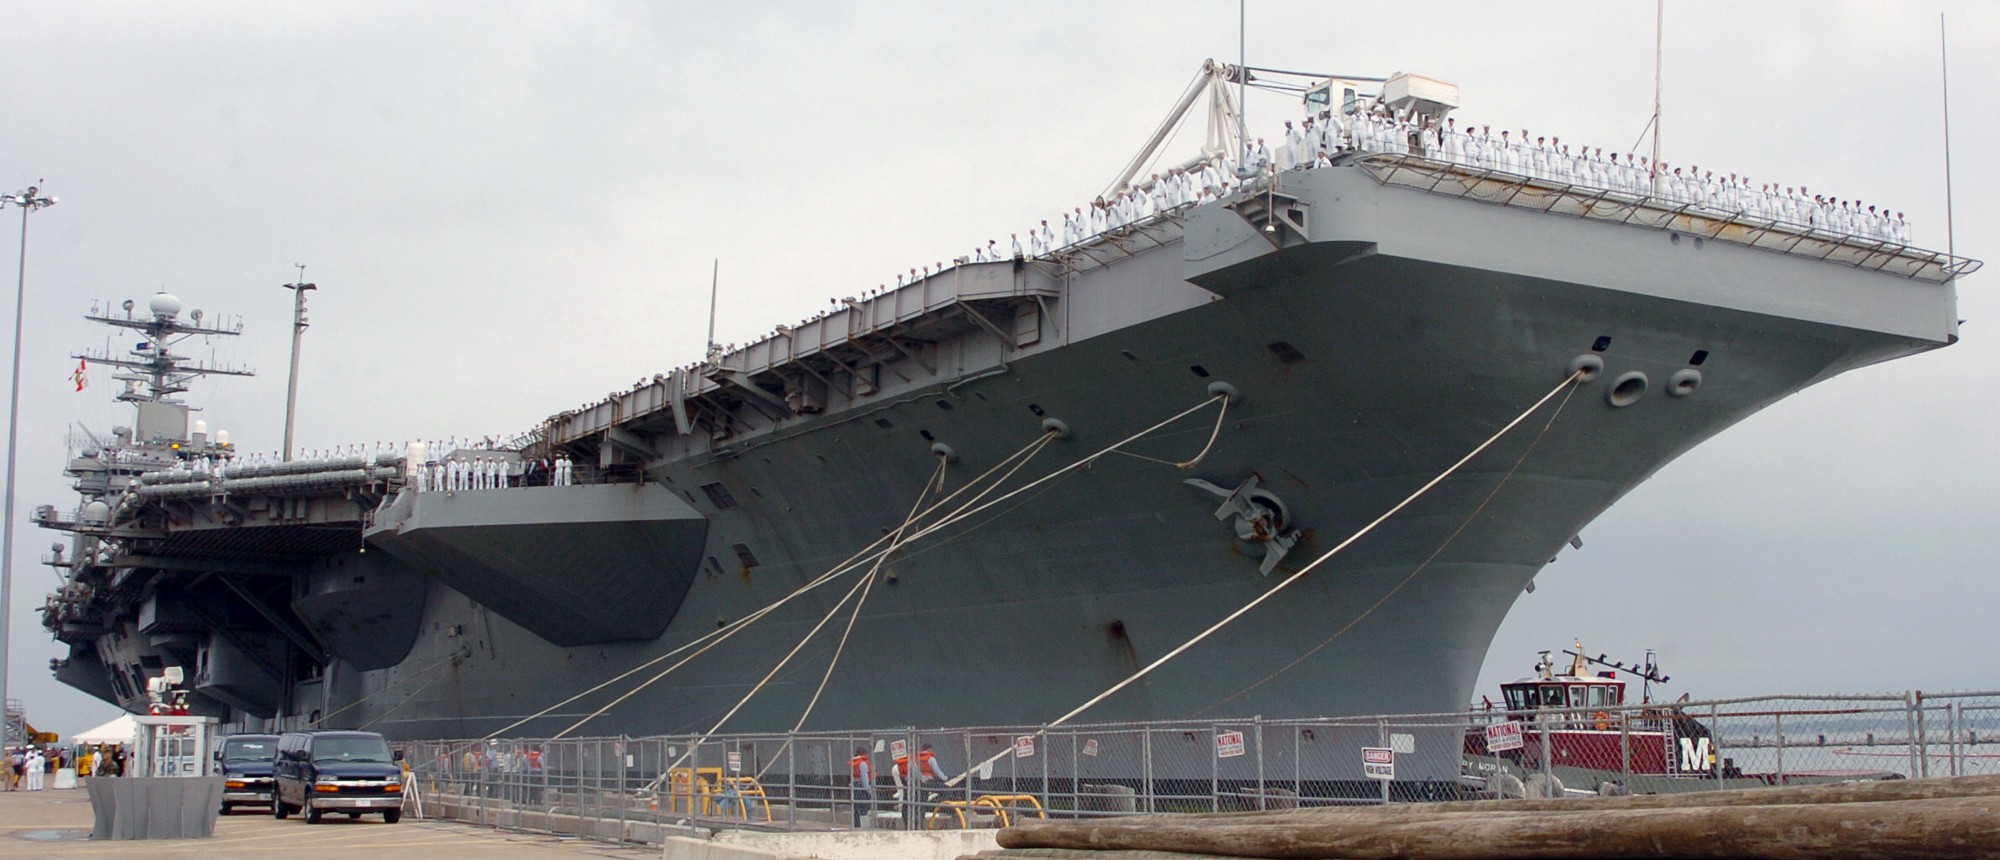 cvn-70 uss carl vinson nimitz class aircraft carrier us navy arriving naval station norfolk virginia 113